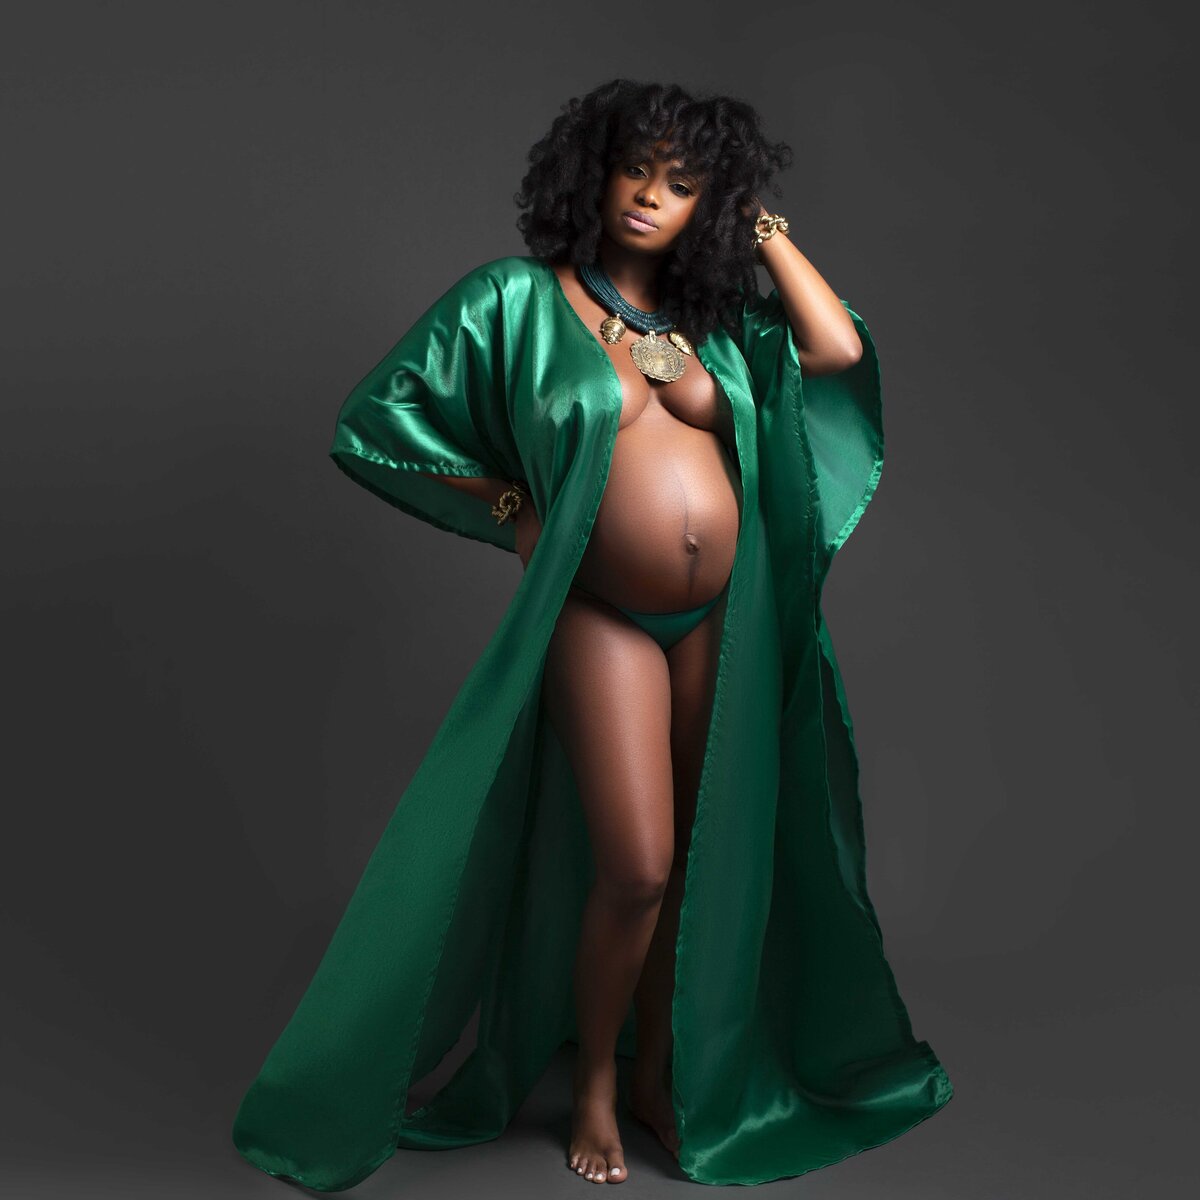 Boudoir-maternity-photography-by-Daisy-Rey-photography-in-NJ